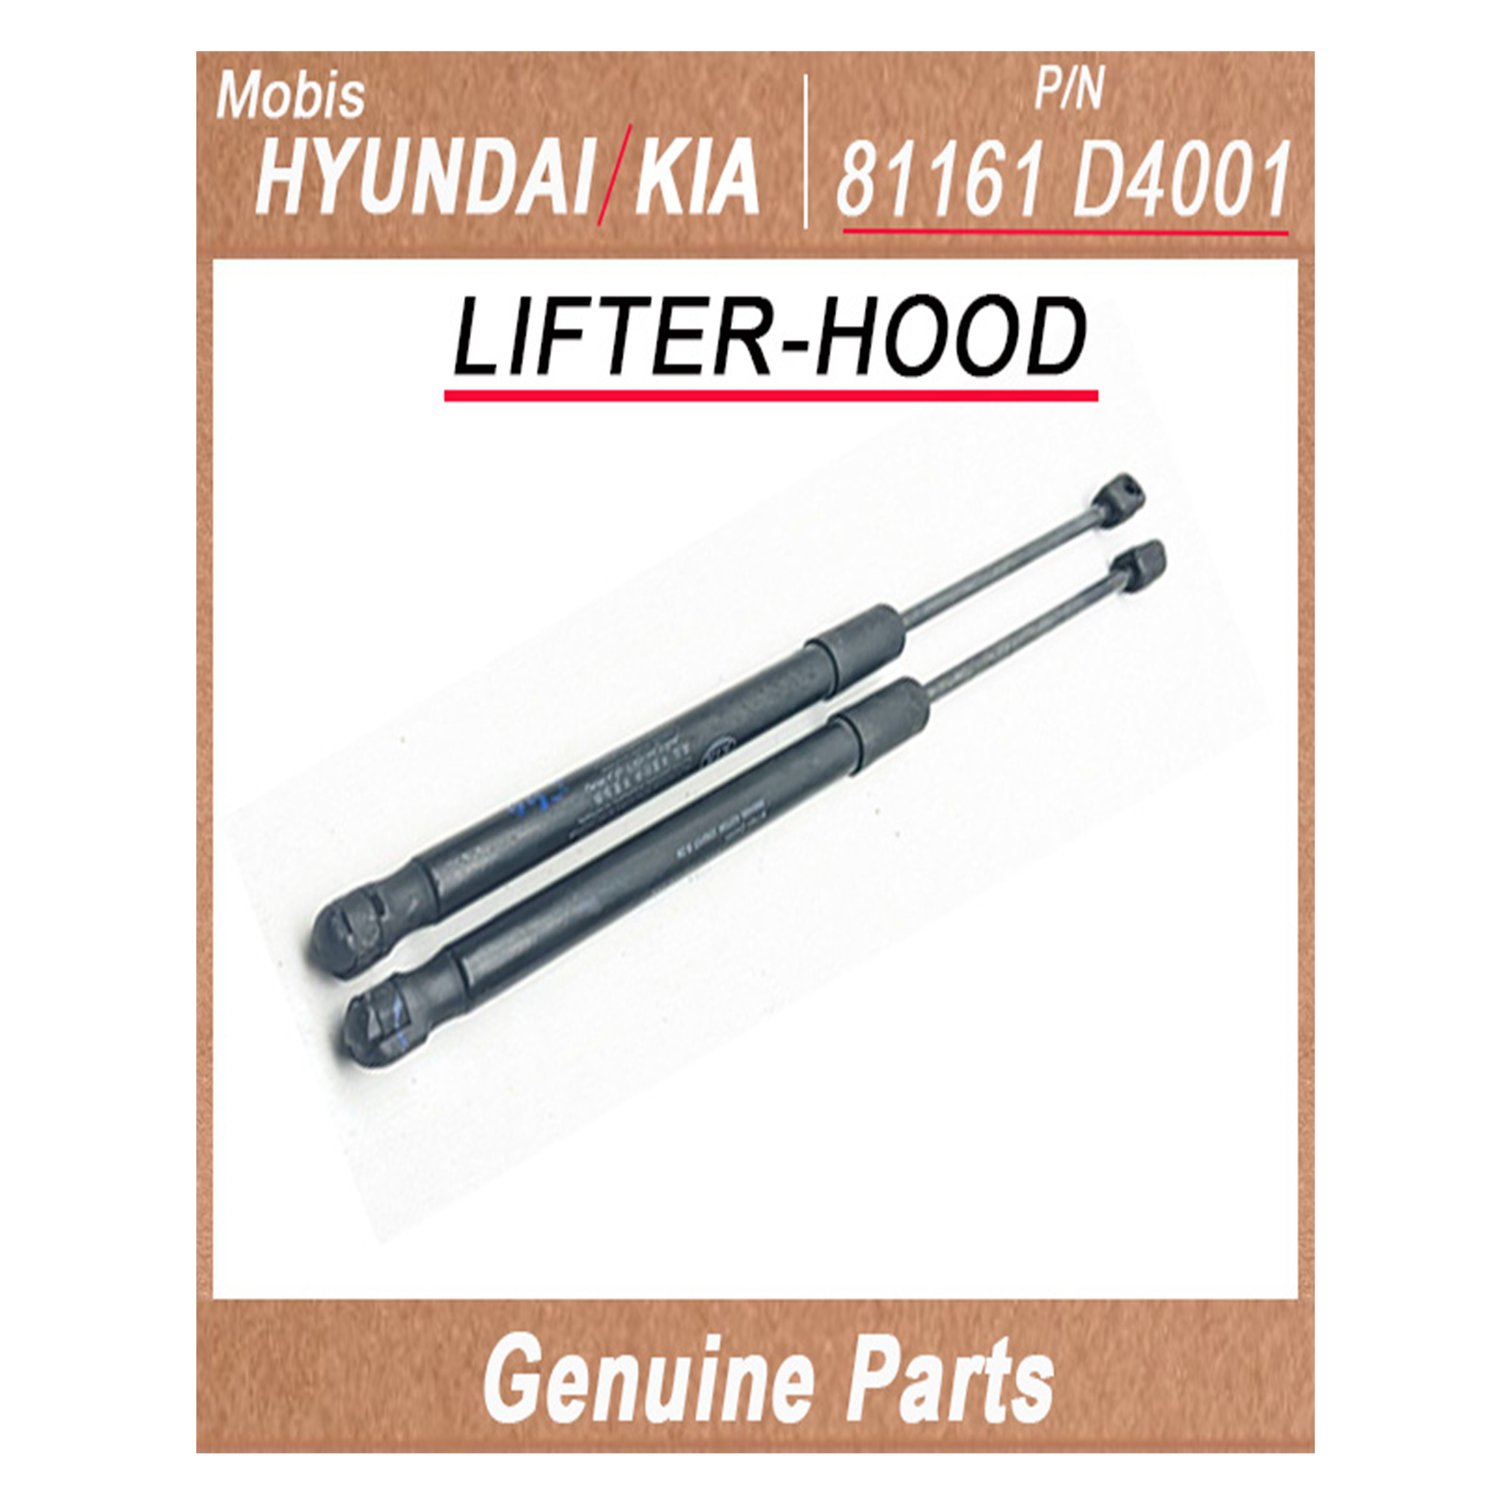 81161D4001 _ LIFTER_HOOD _ Genuine Korean Automotive Spare Parts _ Hyundai Kia _Mobis_